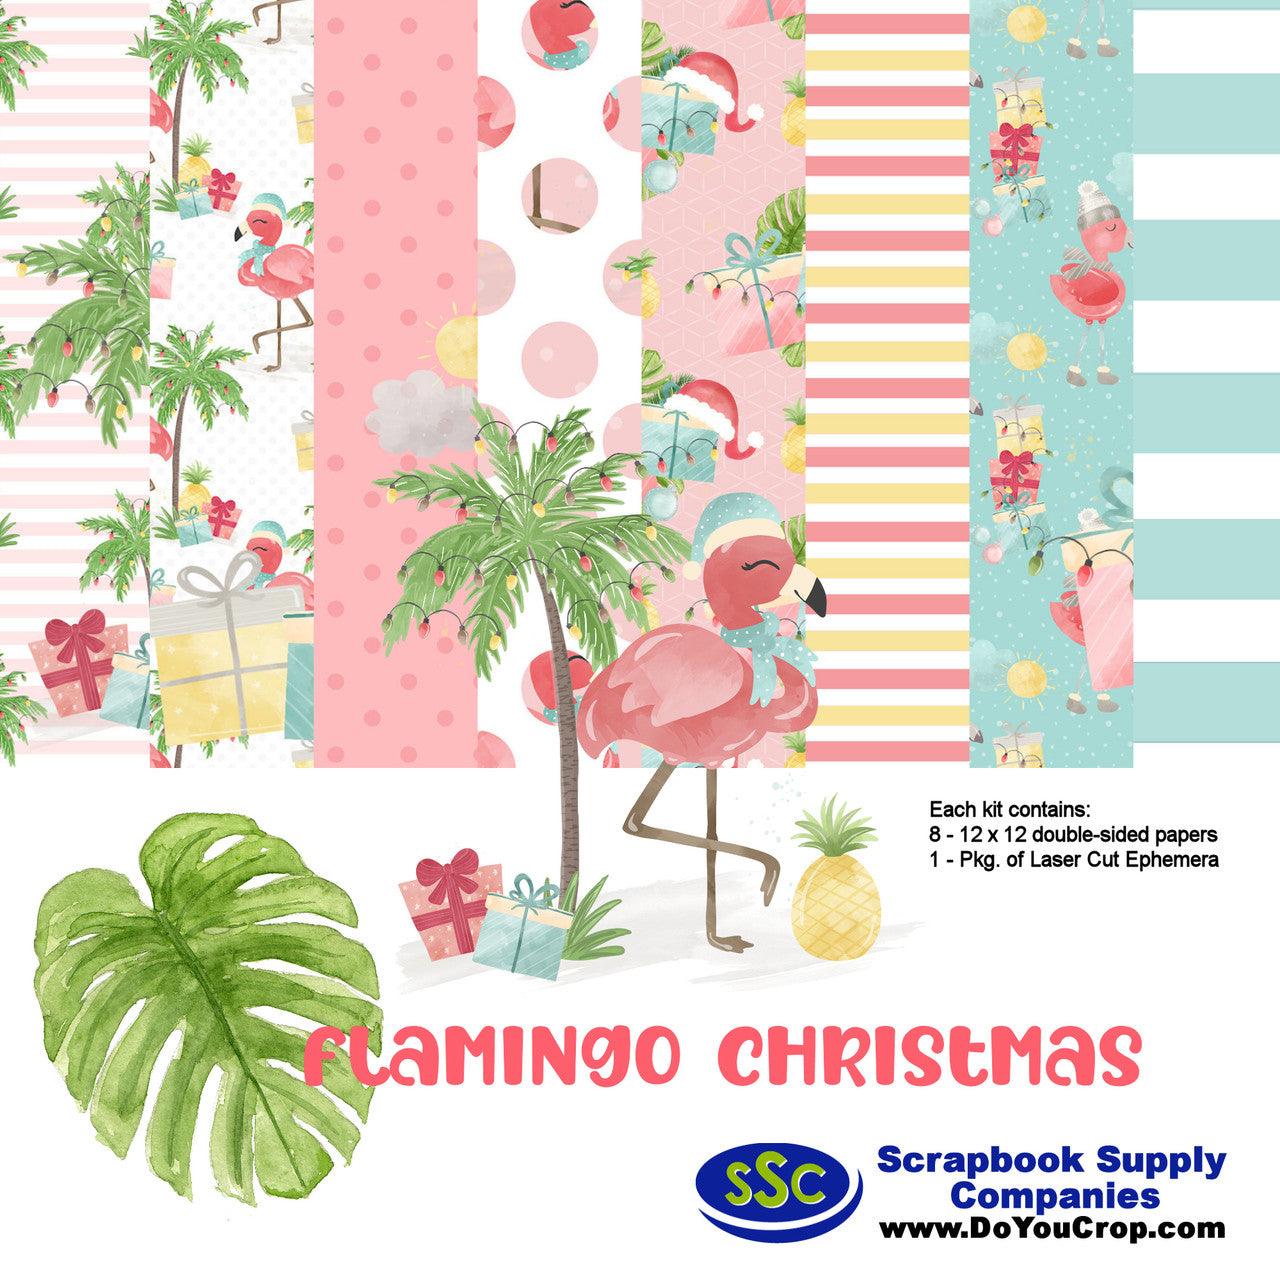 Flamingo Christmas 12 x 12 Scrapbook Paper & Embellishment Kit by SSC Designs